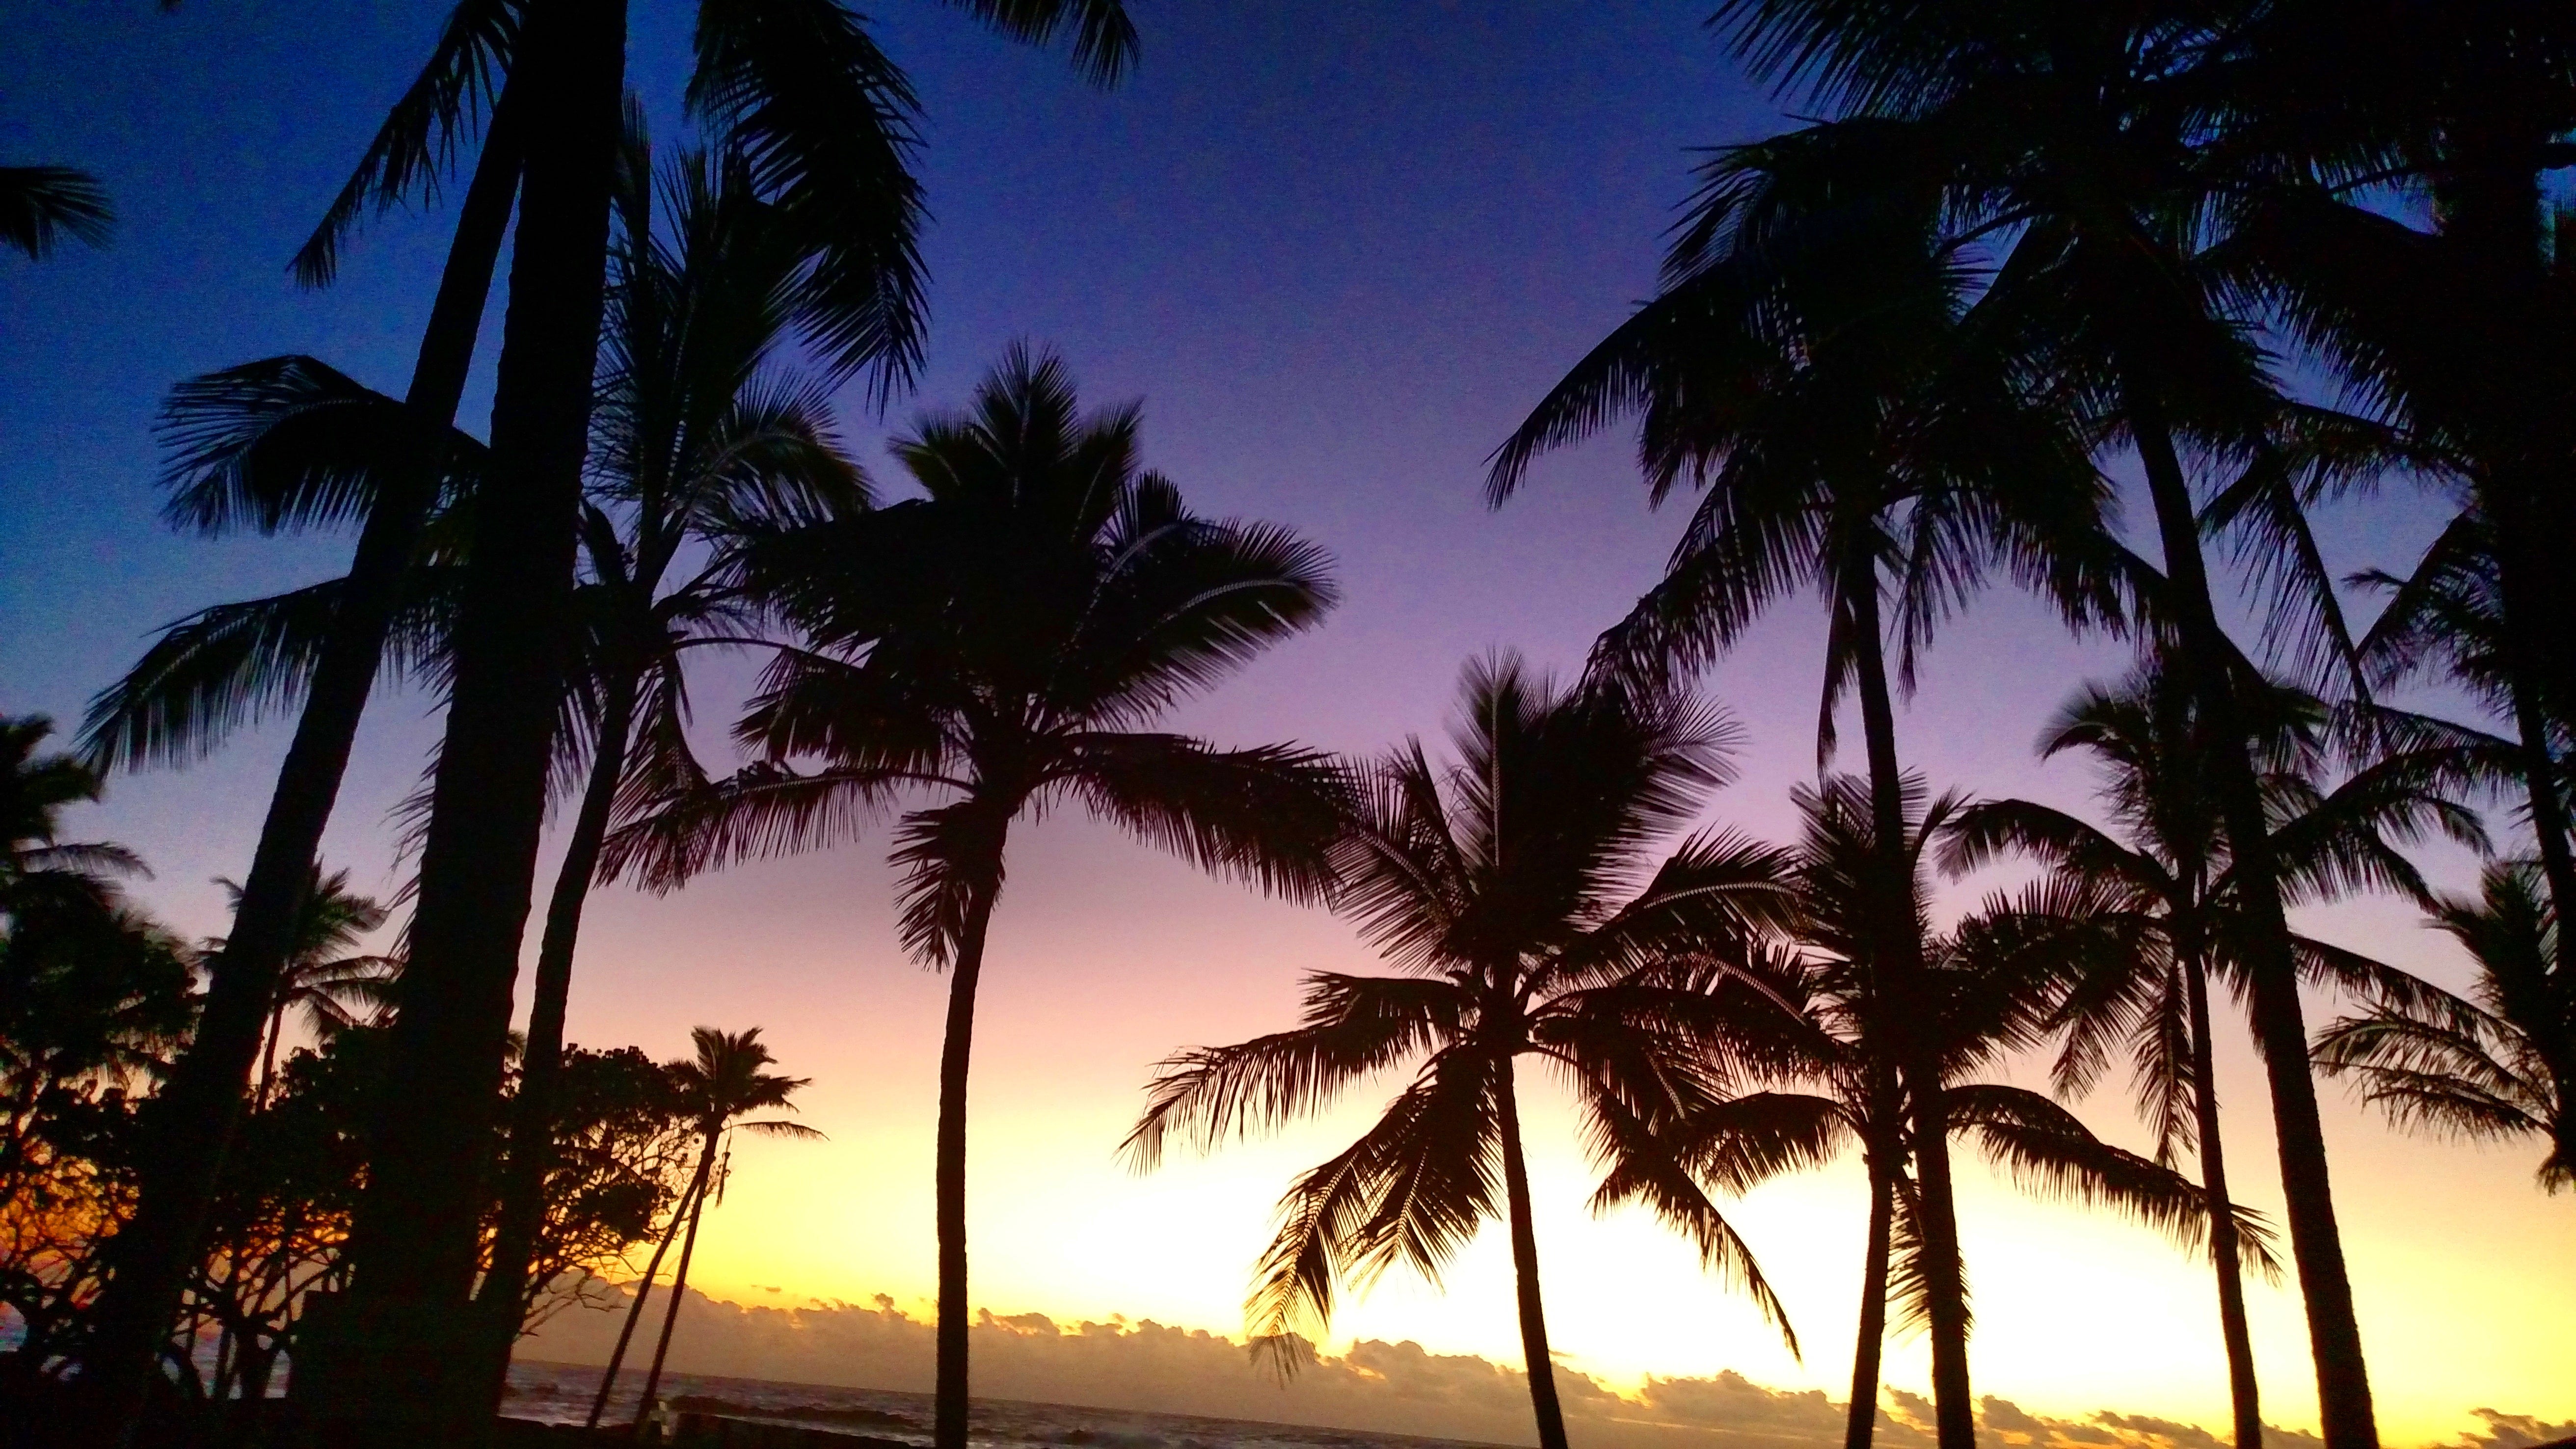 Sunset on the palms